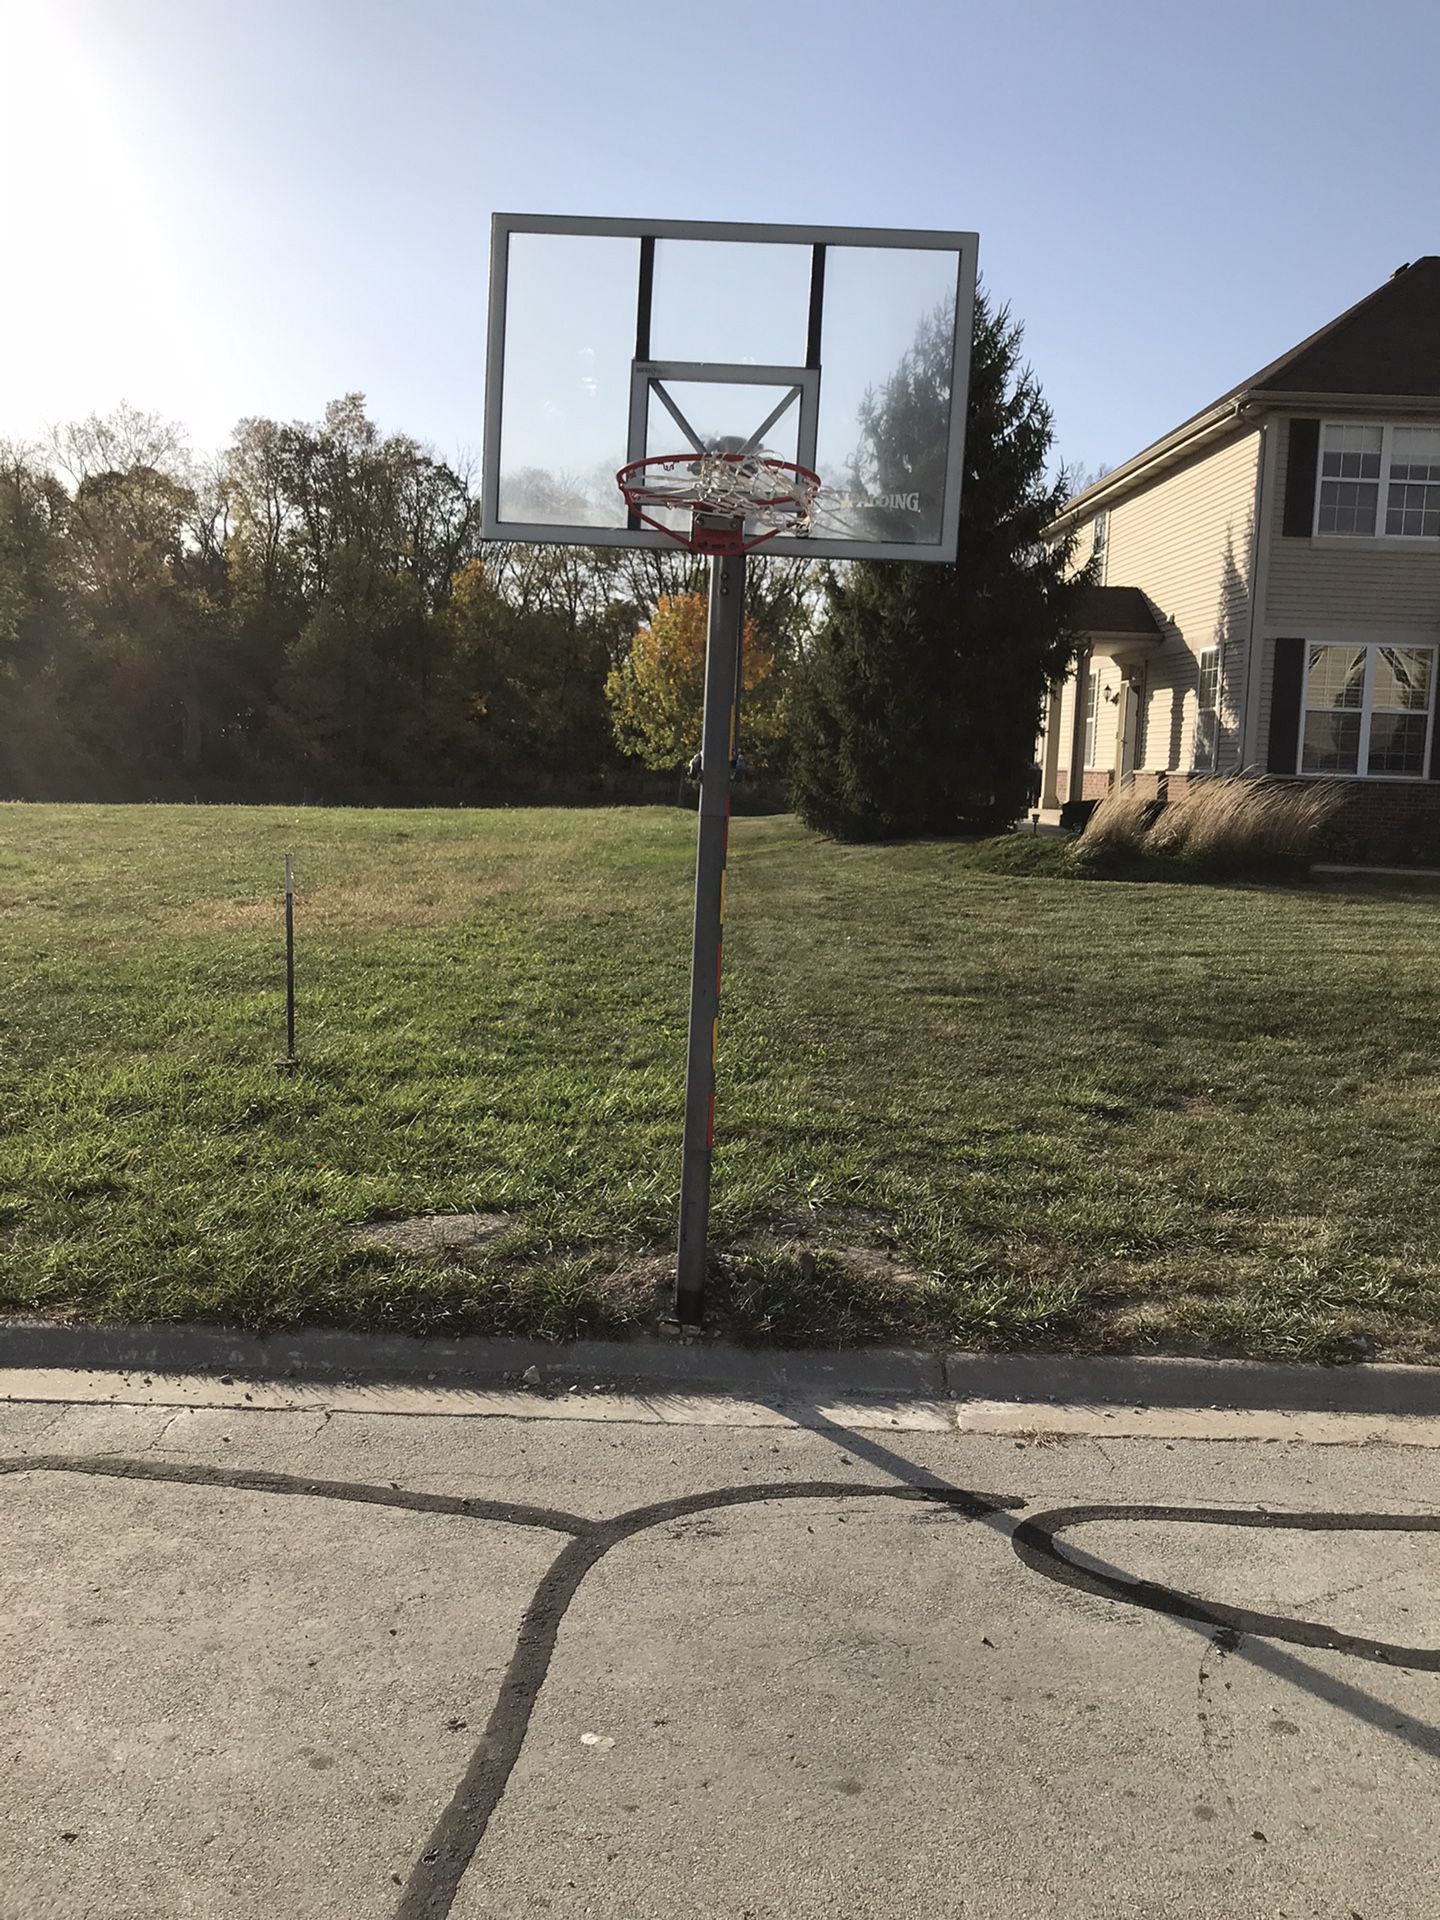 Spaulding basketball pole and hoop